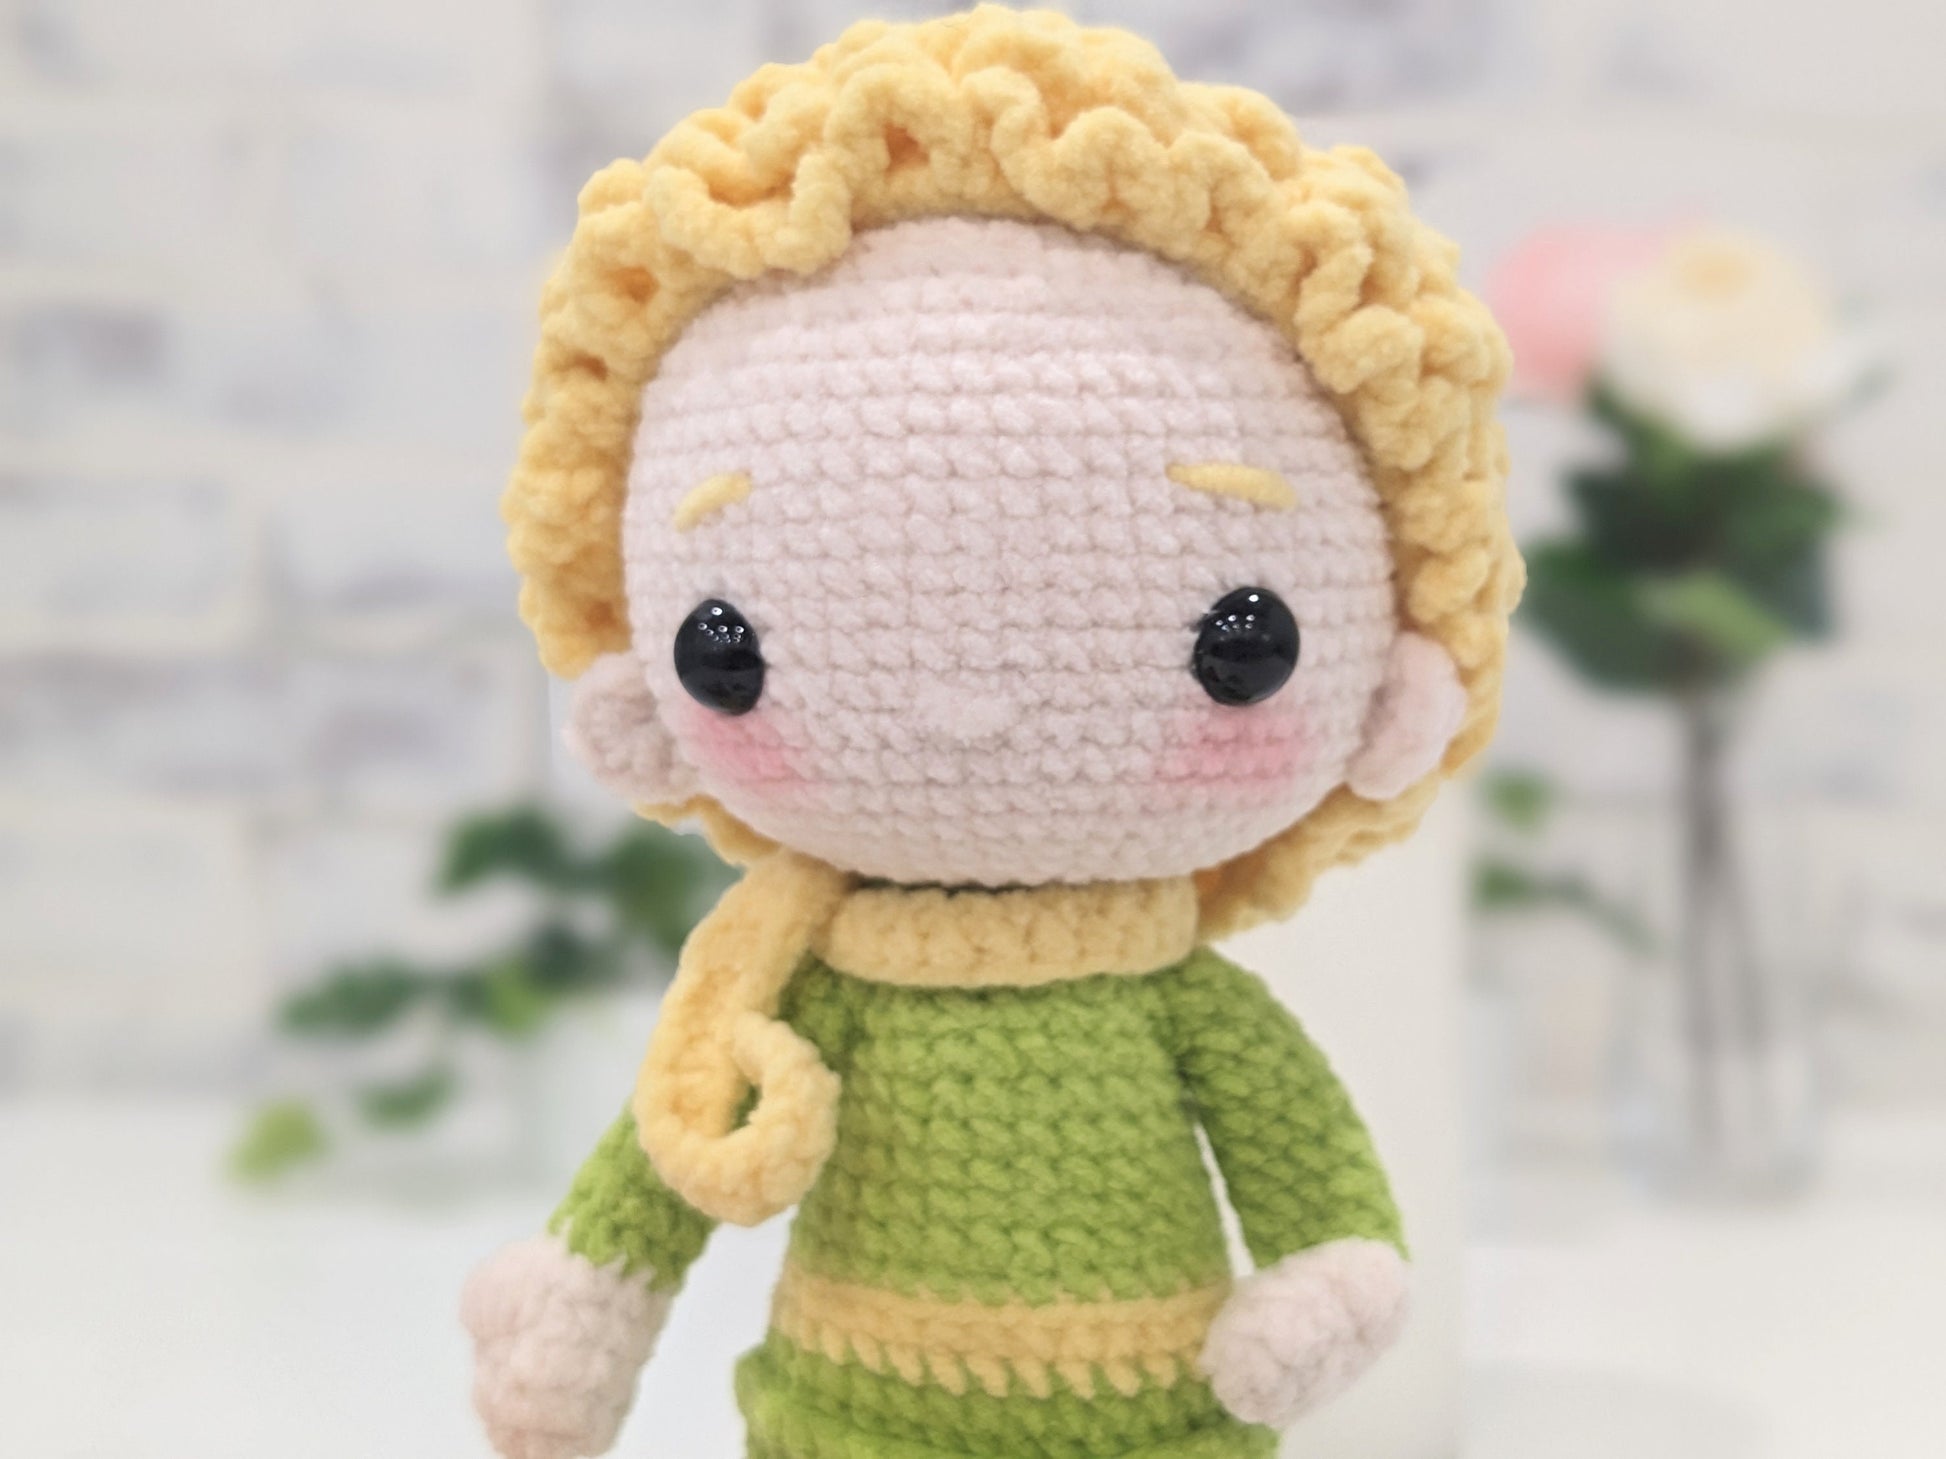 Doll Amigurumi crochet handmade toy stuffed hand New kiki do you